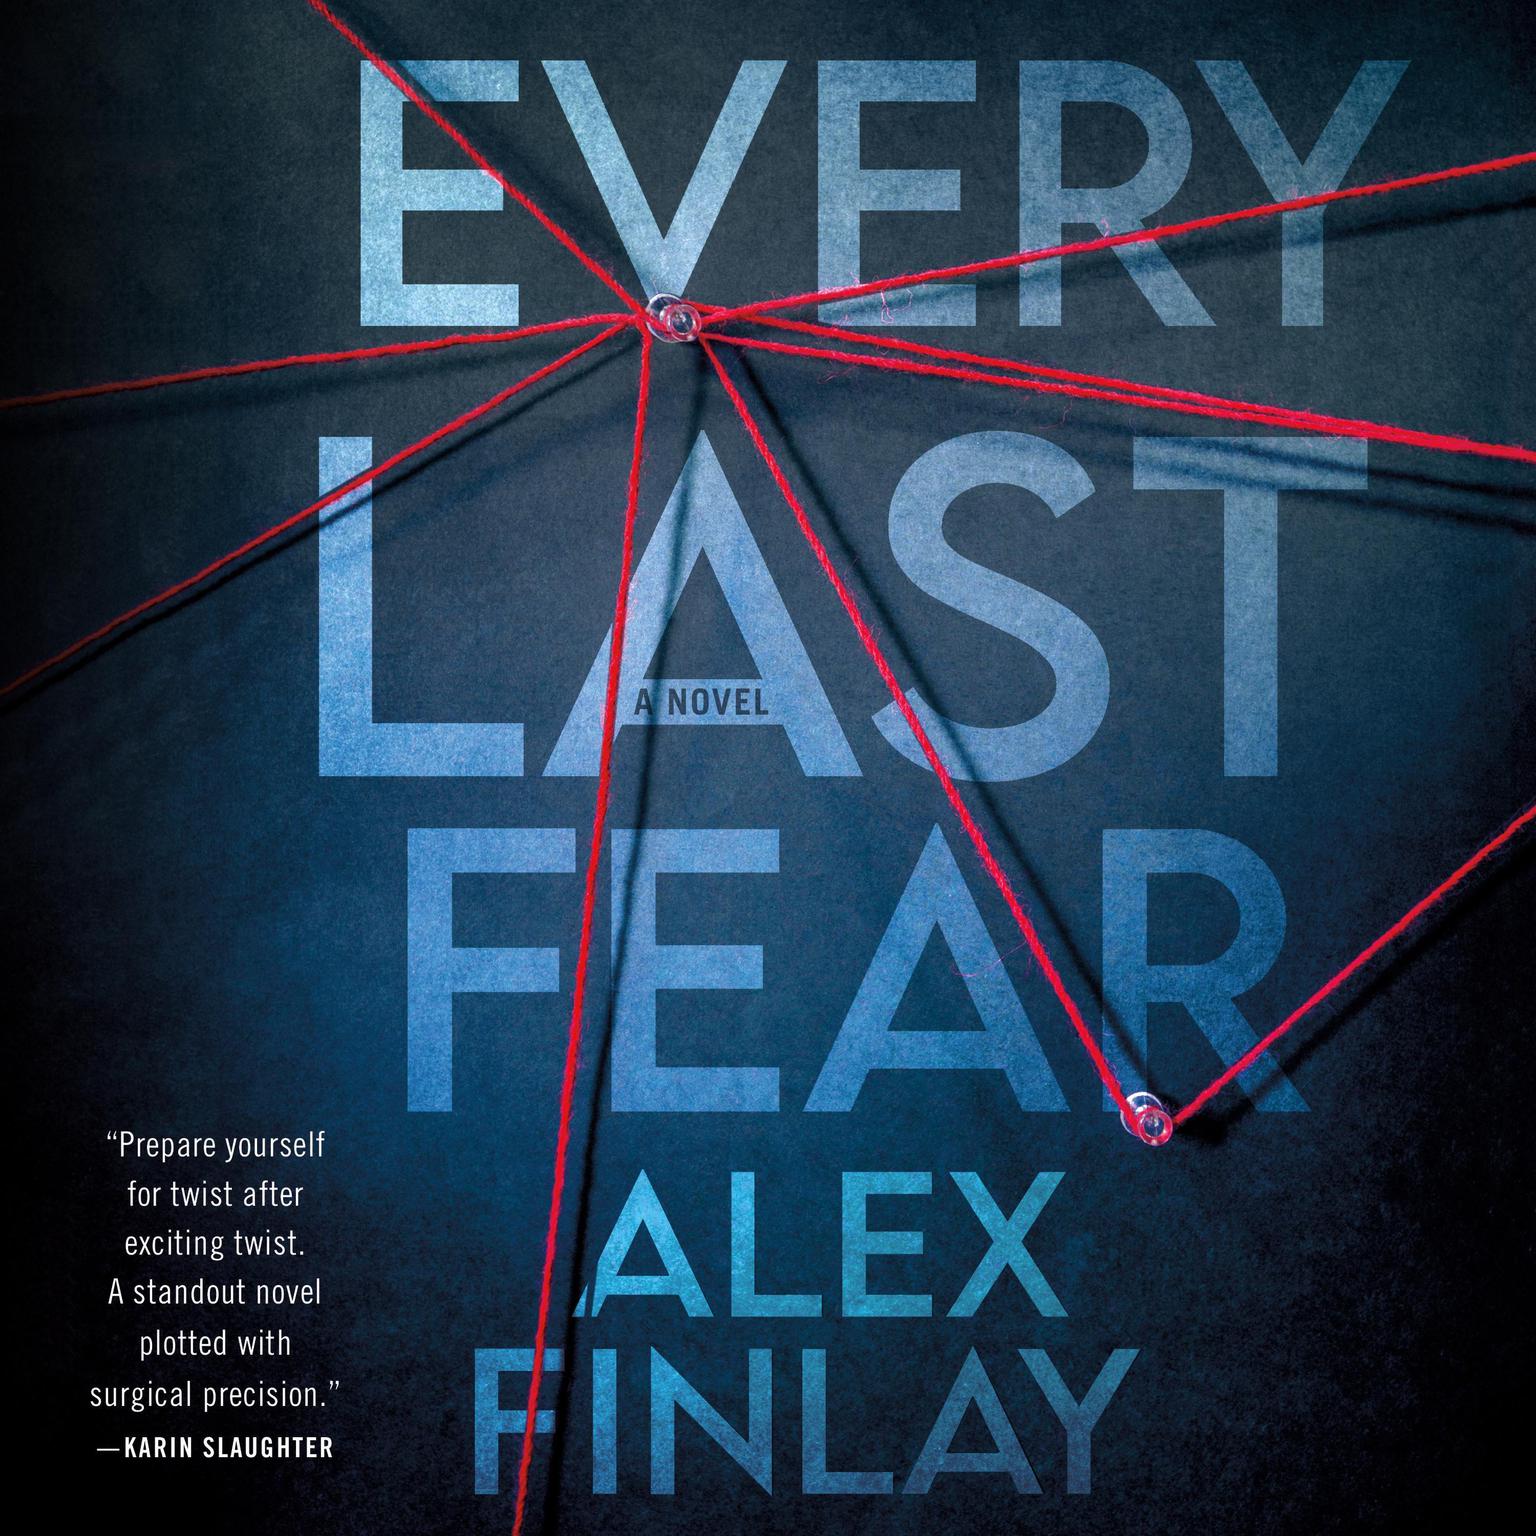 Every Last Fear: A Novel Audiobook, by Alex Finlay